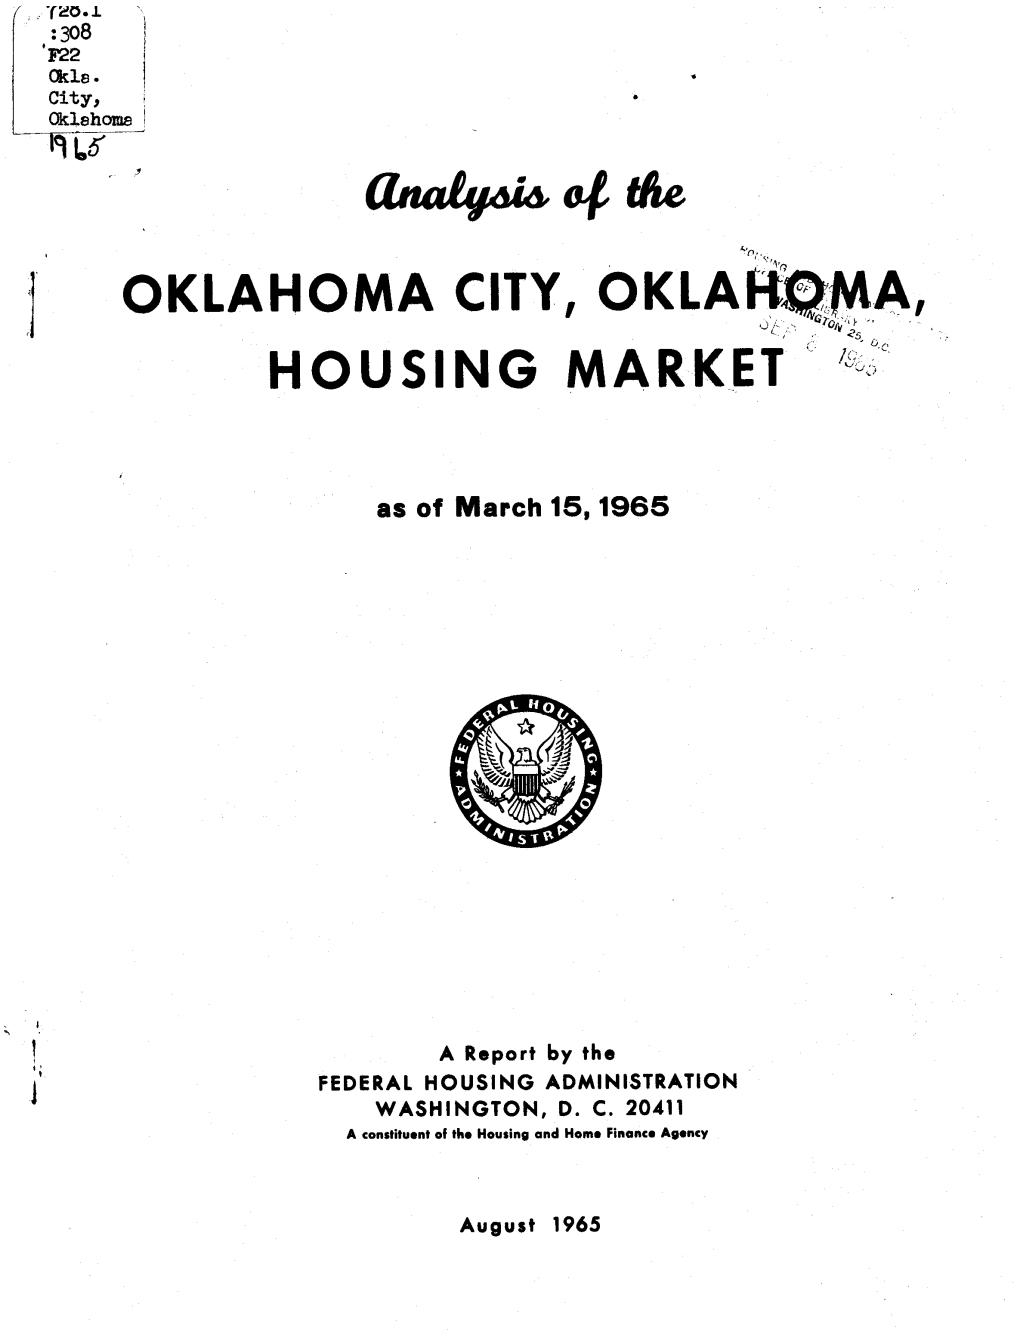 Analysis of the Oklahoma City, Oklahoma Housing Market (1965)